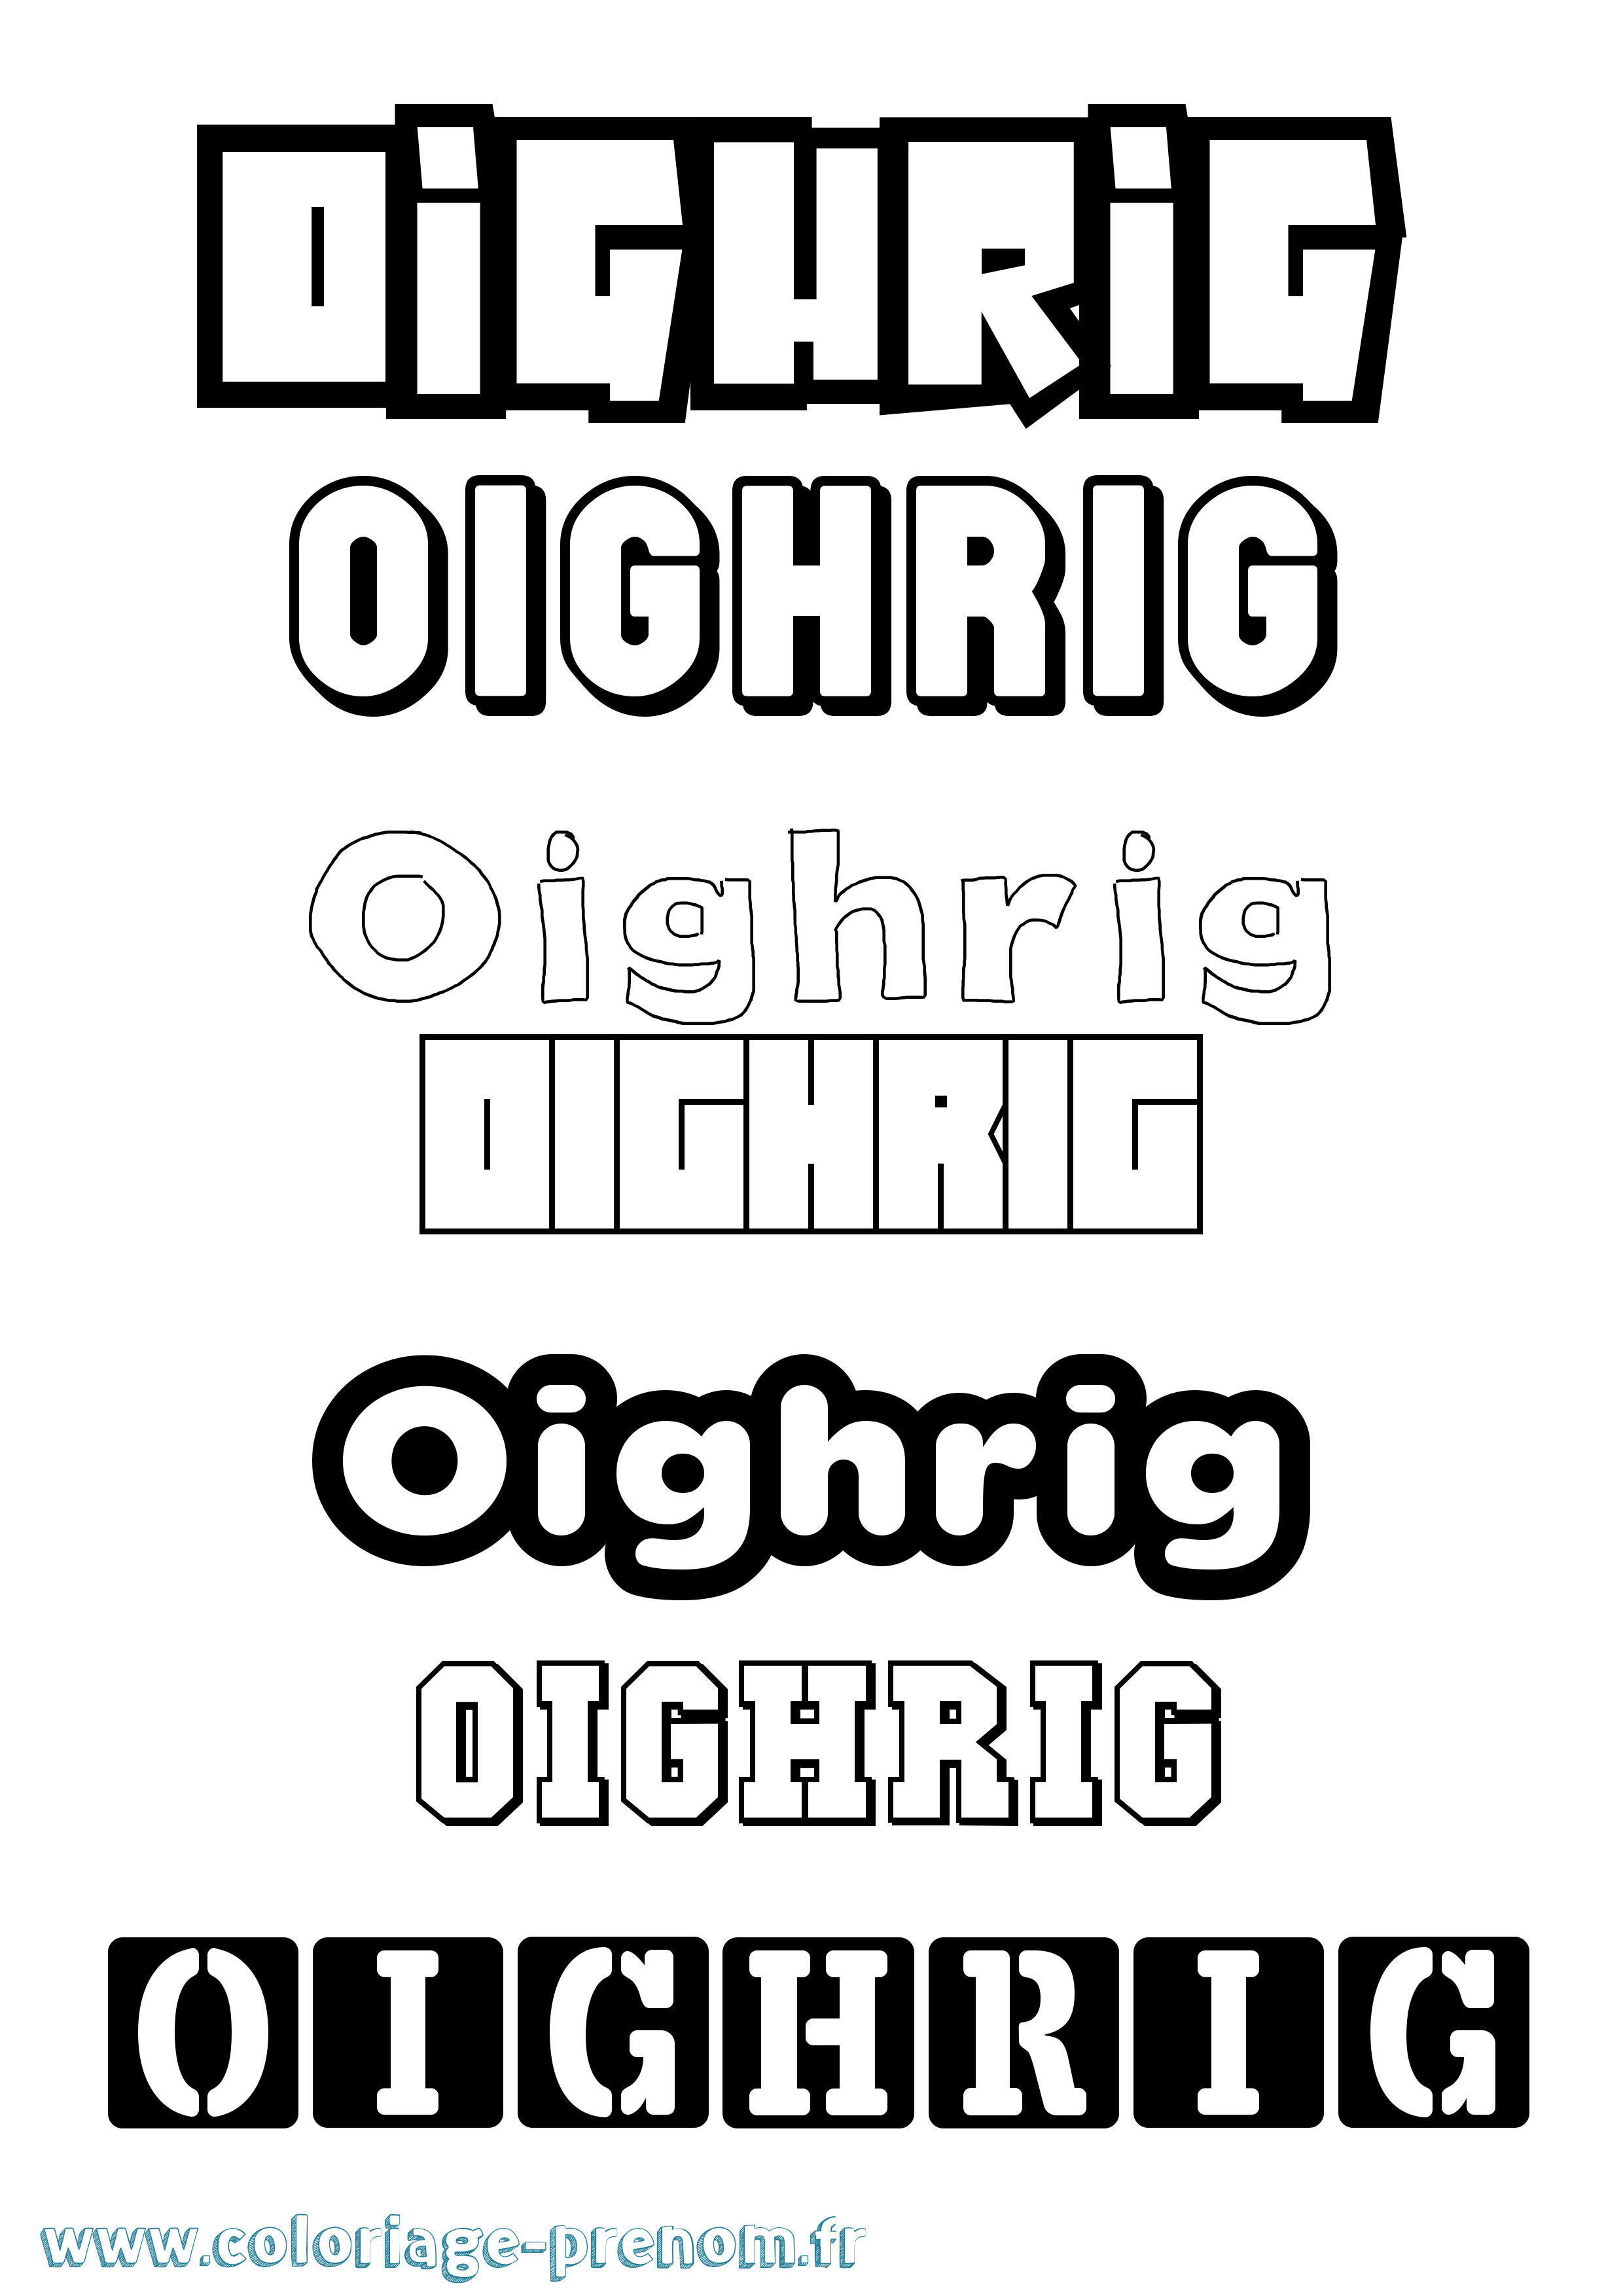 Coloriage prénom Oighrig Simple